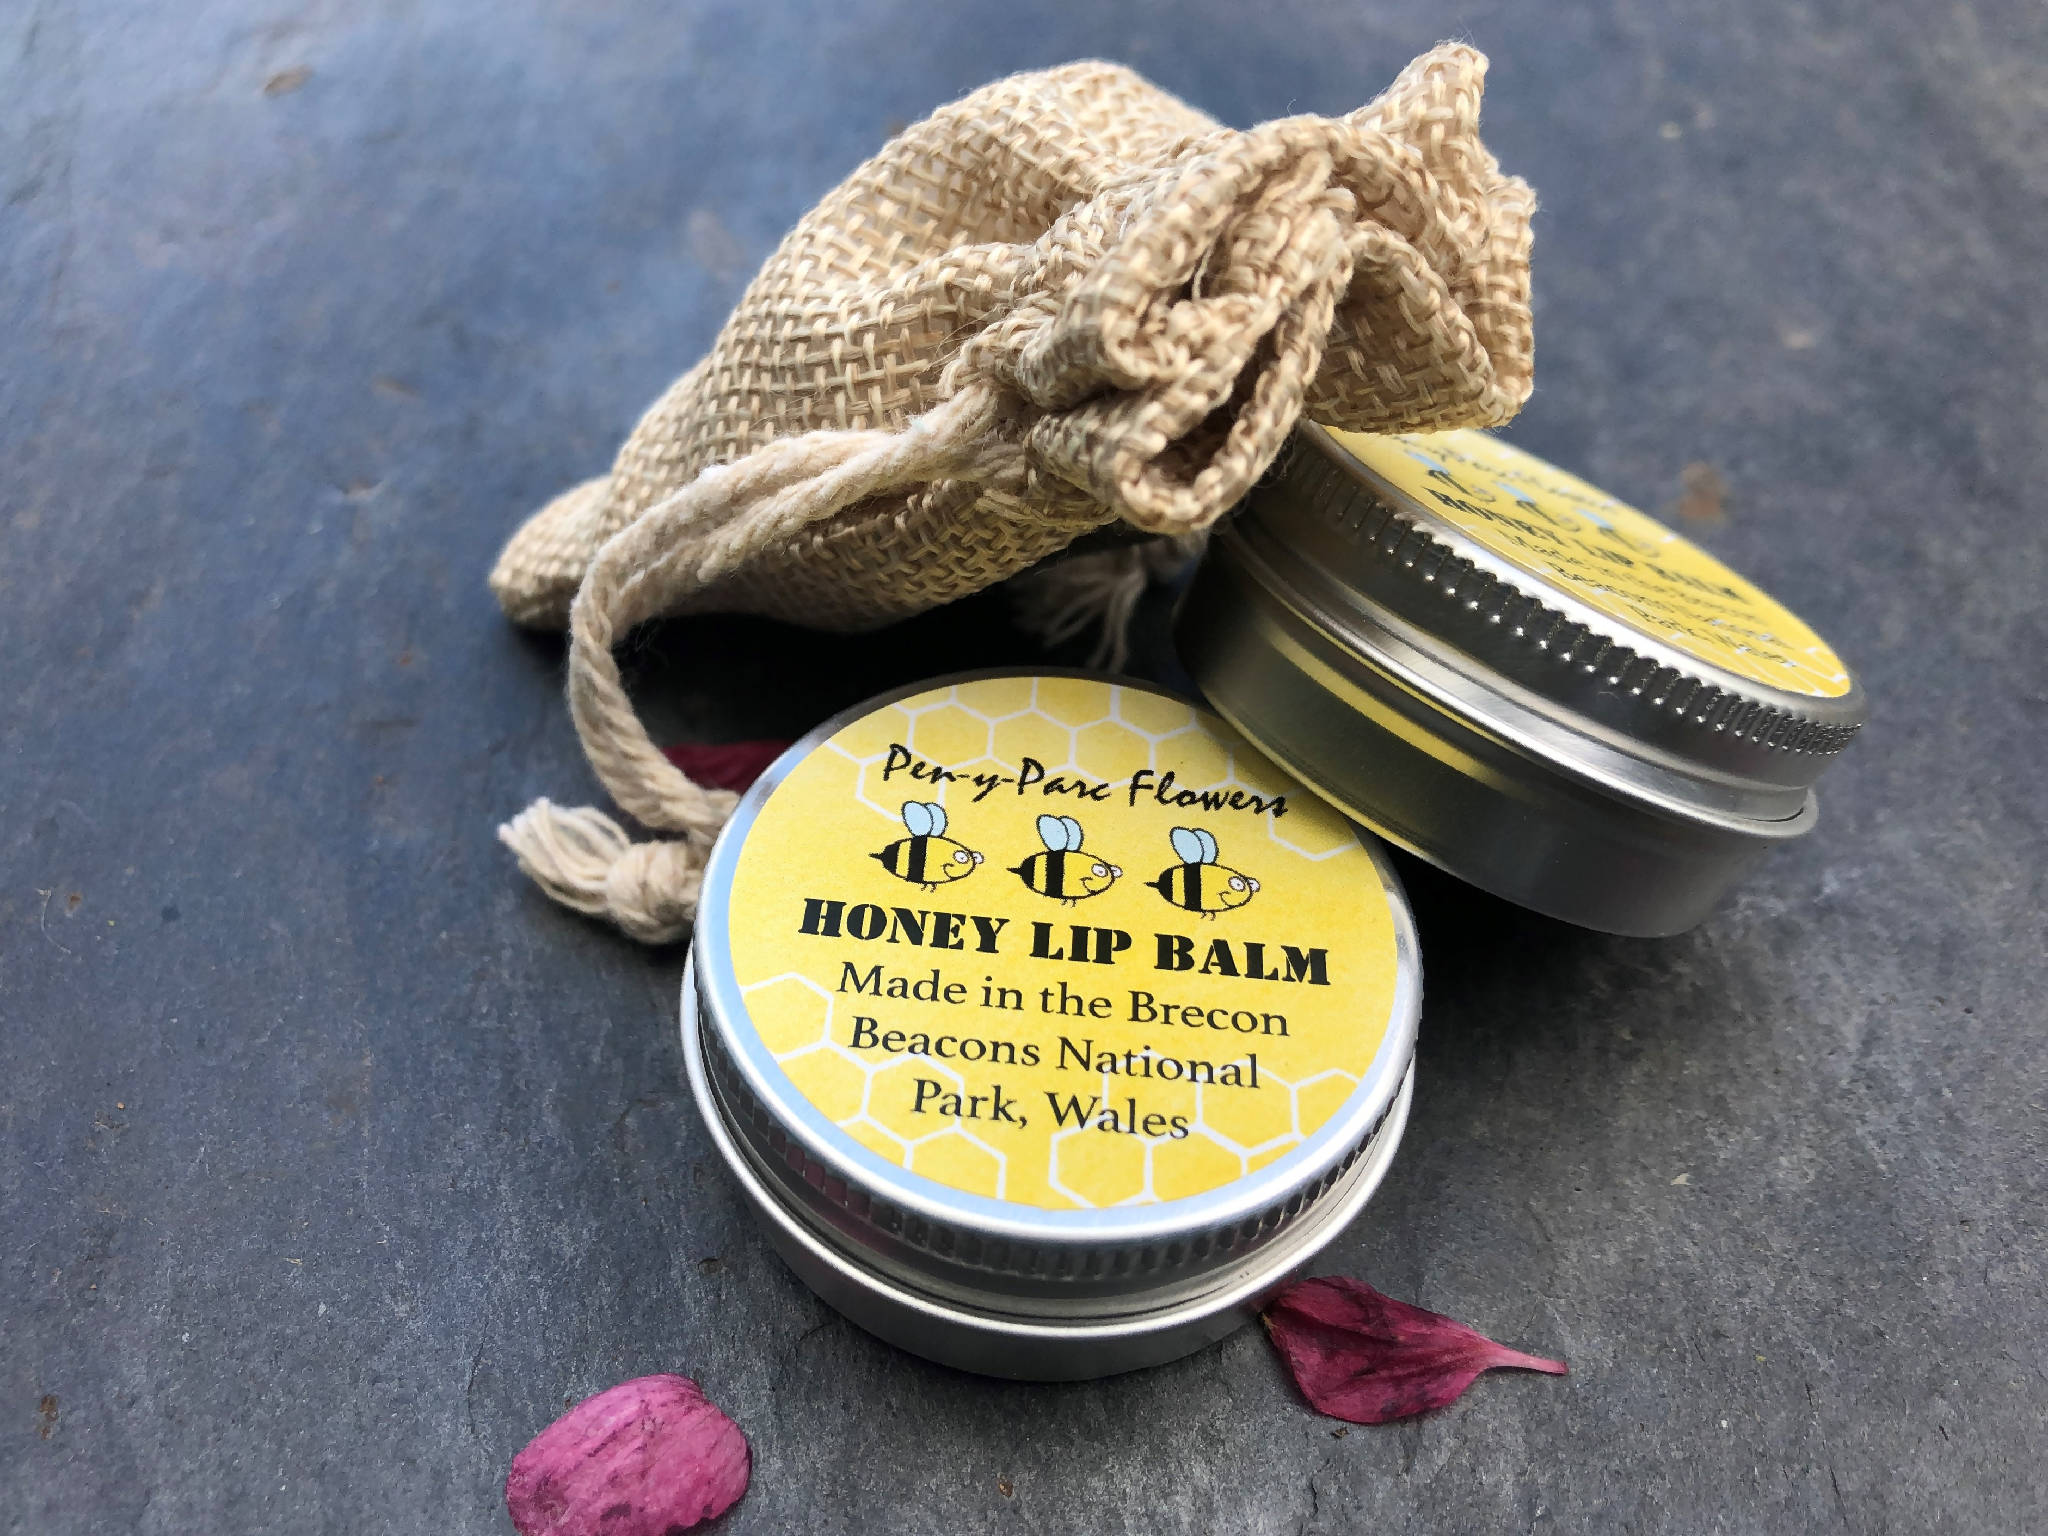 Handmade natural beeswax lip balm in jute gift bag